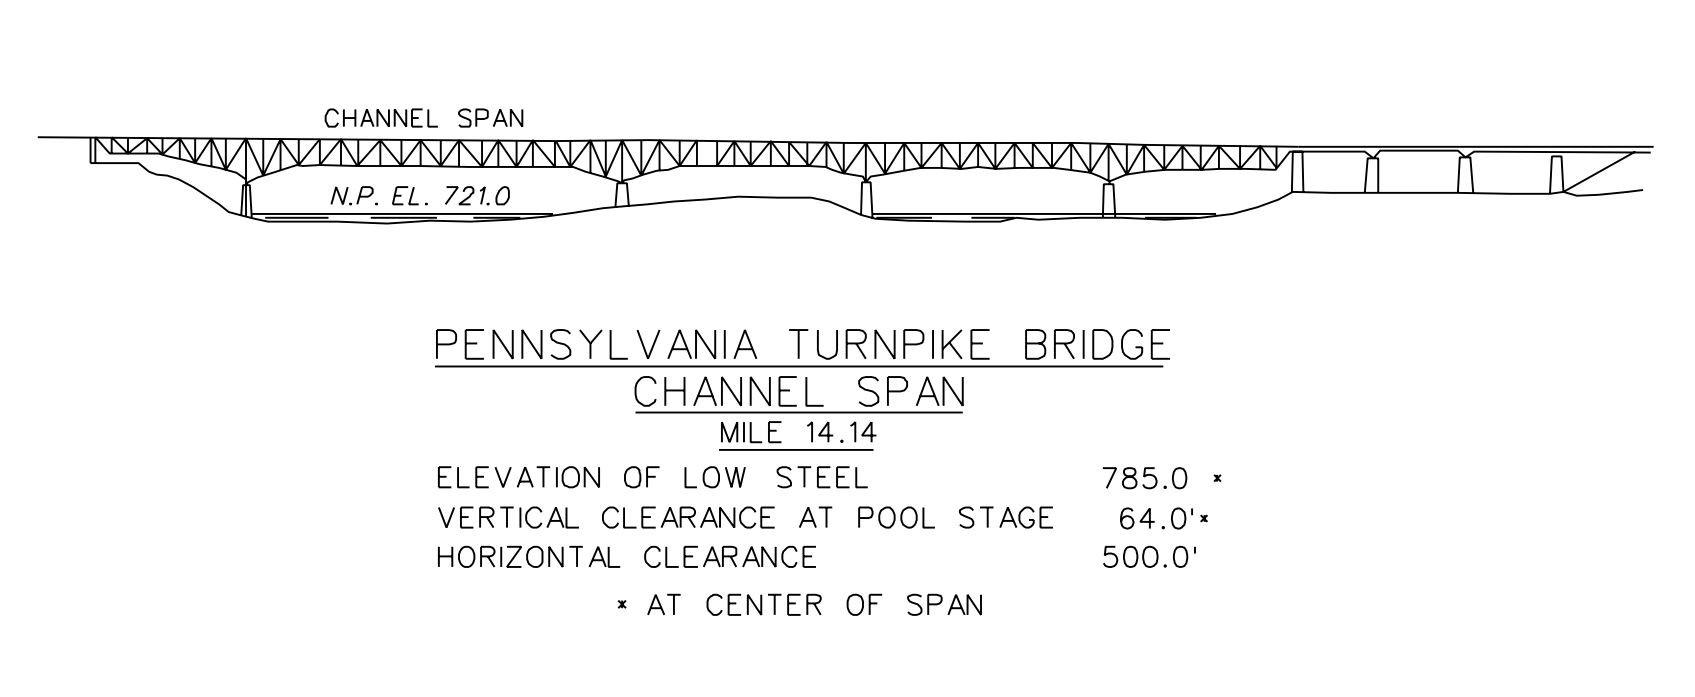 Pennsylvania Turnpike Bridge Clearances | Bridge Calculator LLC